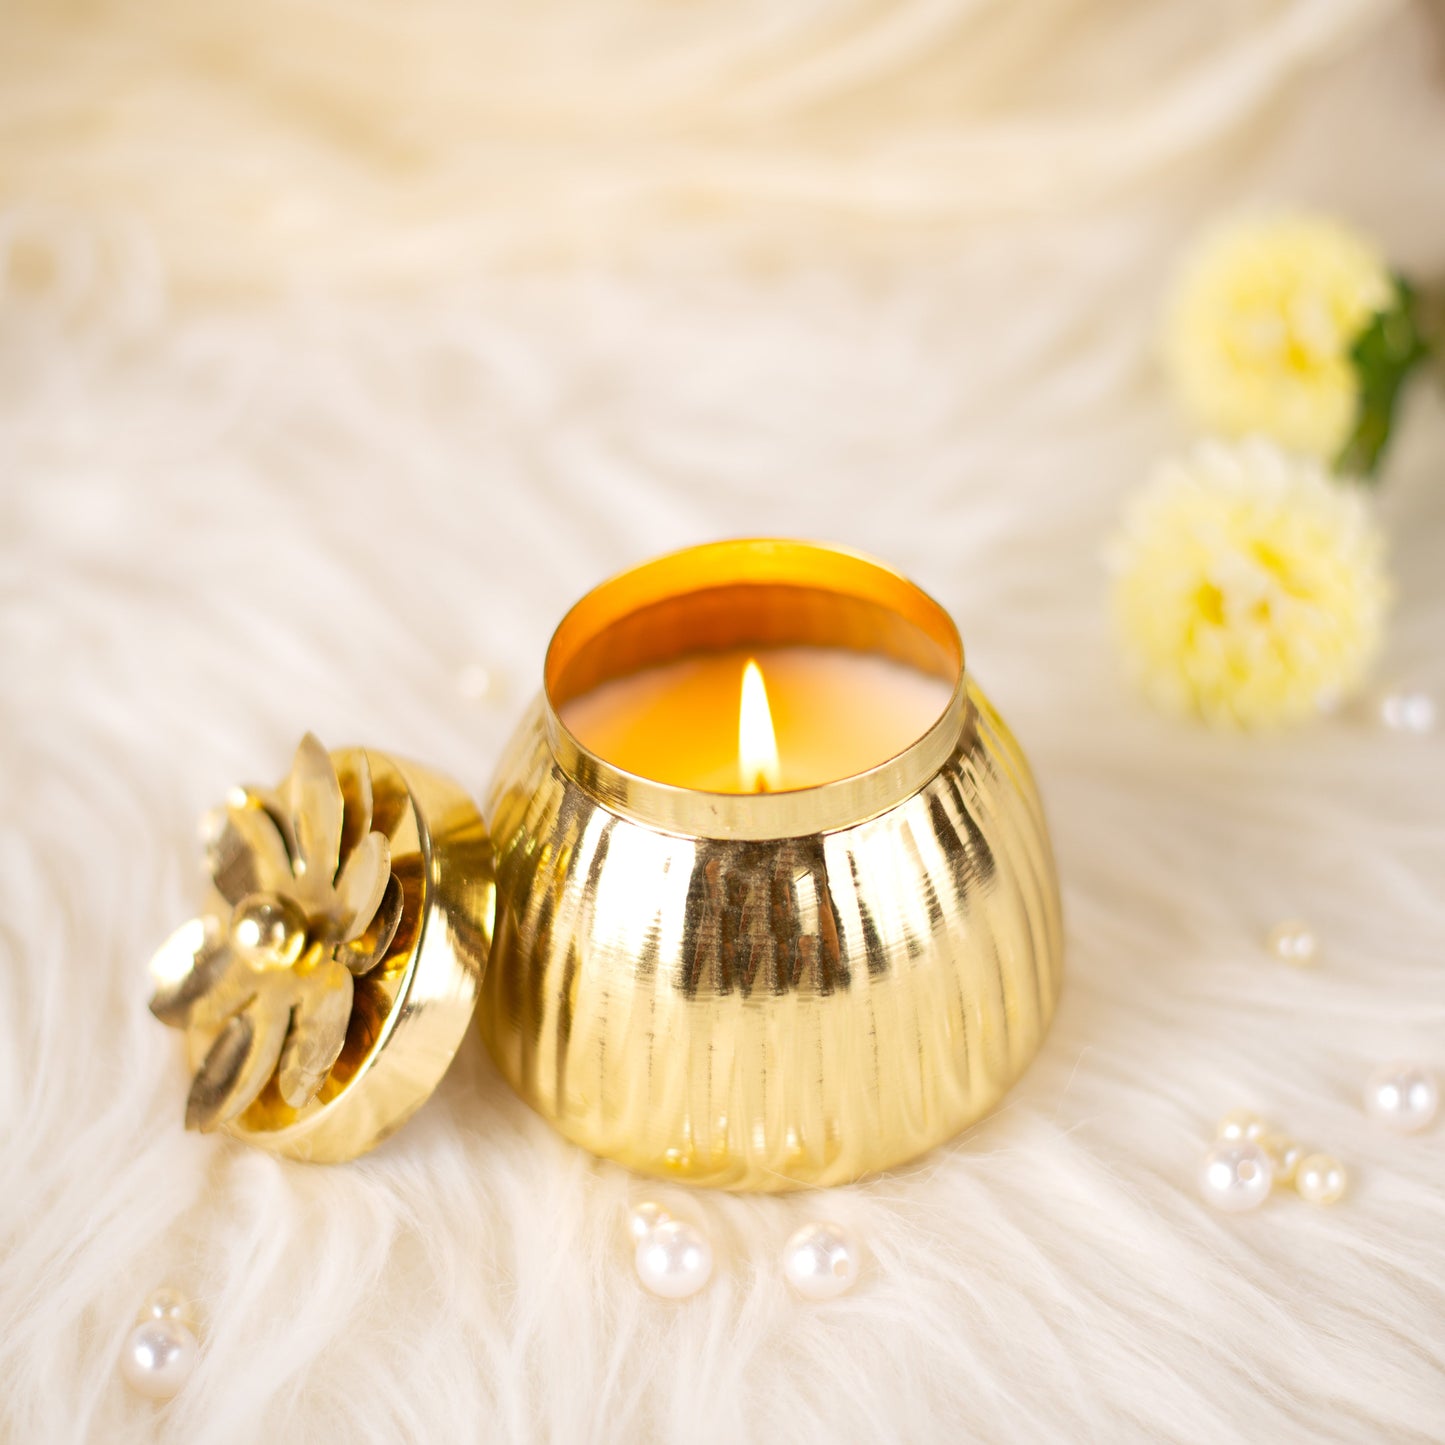 Candle Jar - Hand-poured artisanal decorative candle - MAKAIBARI TEA